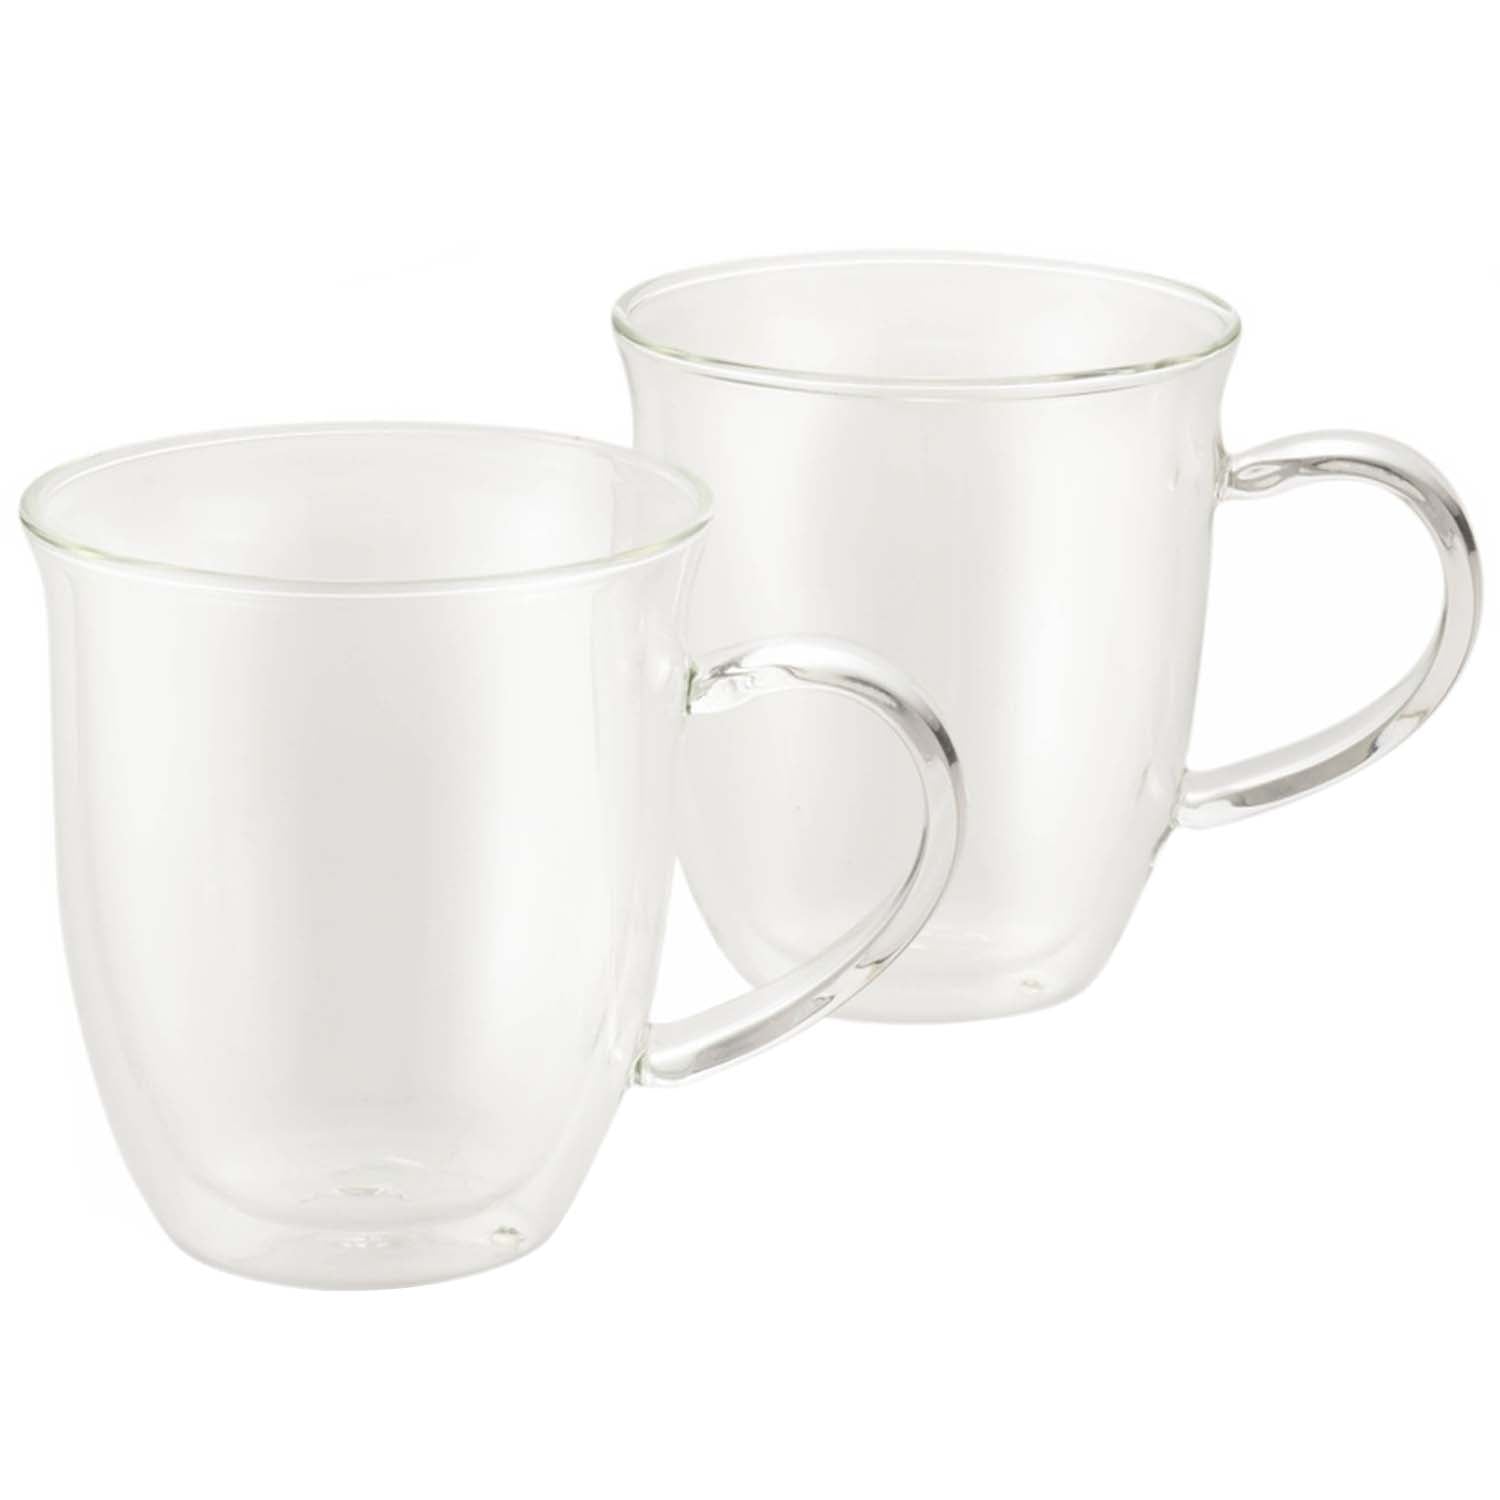 BonJour Insulated Borosilicate Glass Espresso Cups, Clear, 6 oz - 2 count